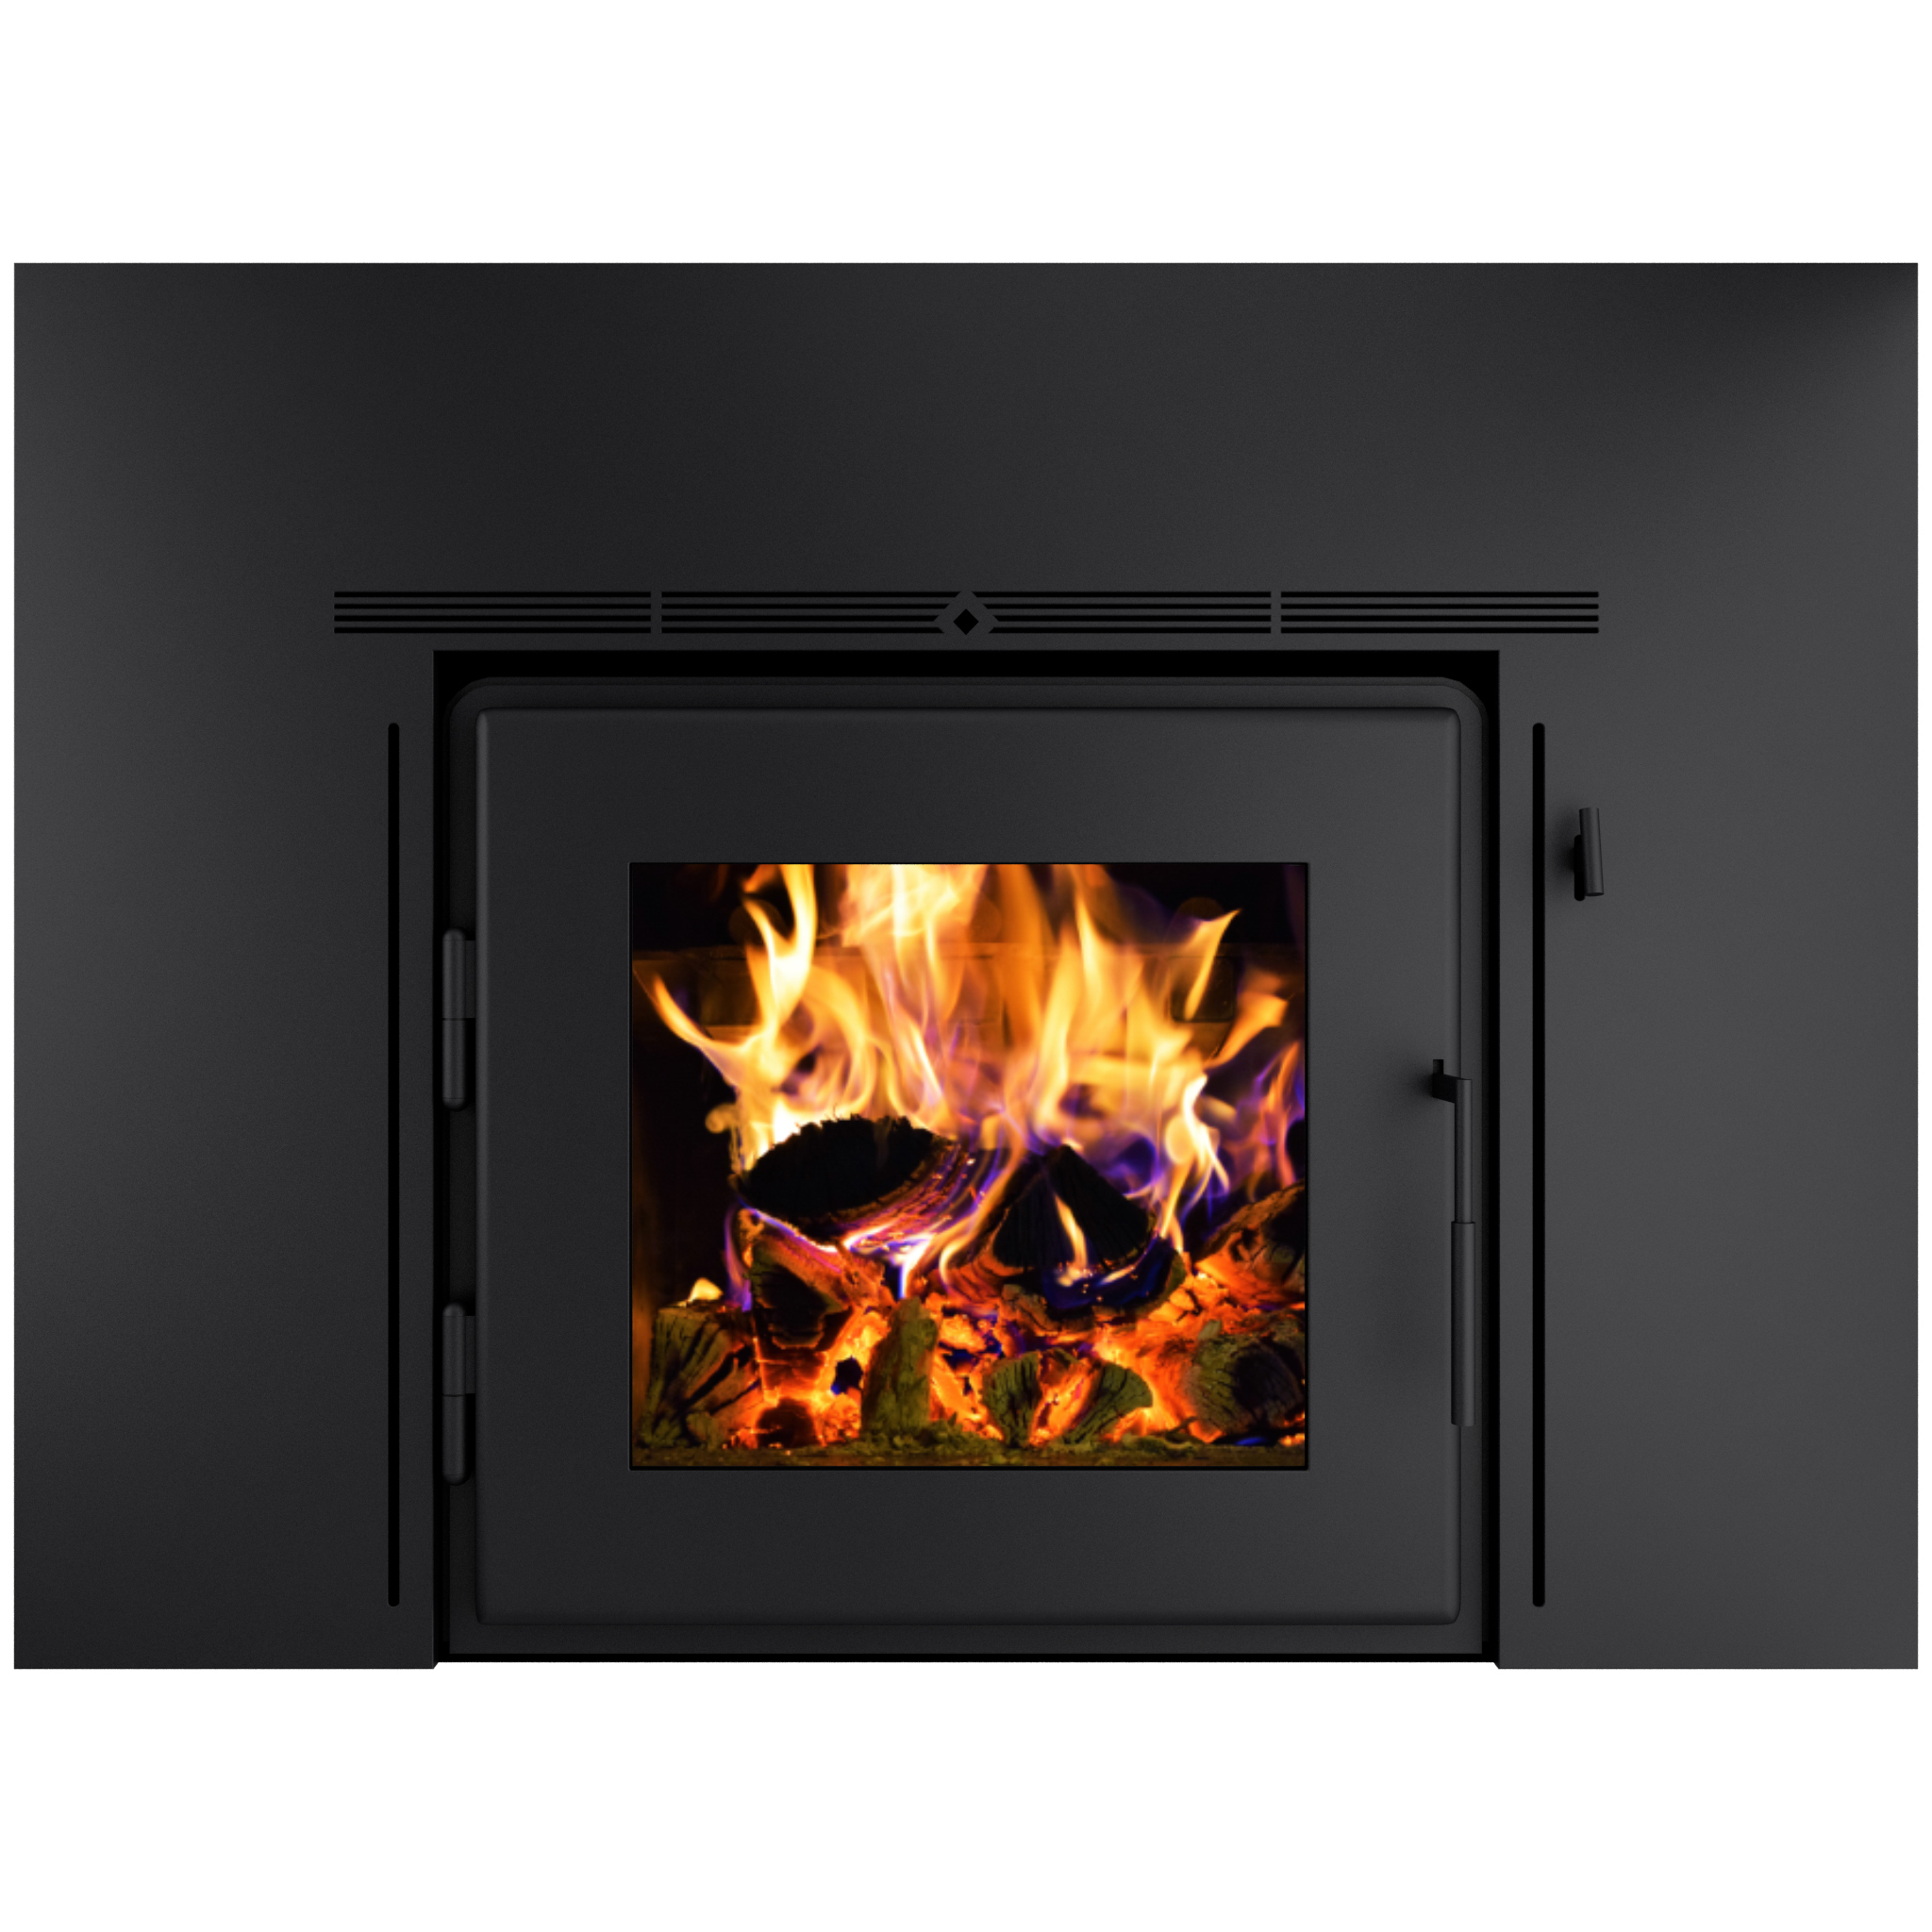 MF Fire 27 Nova 2 Wood Stove - Satin Black Body with Black Door – US  Fireplace Store